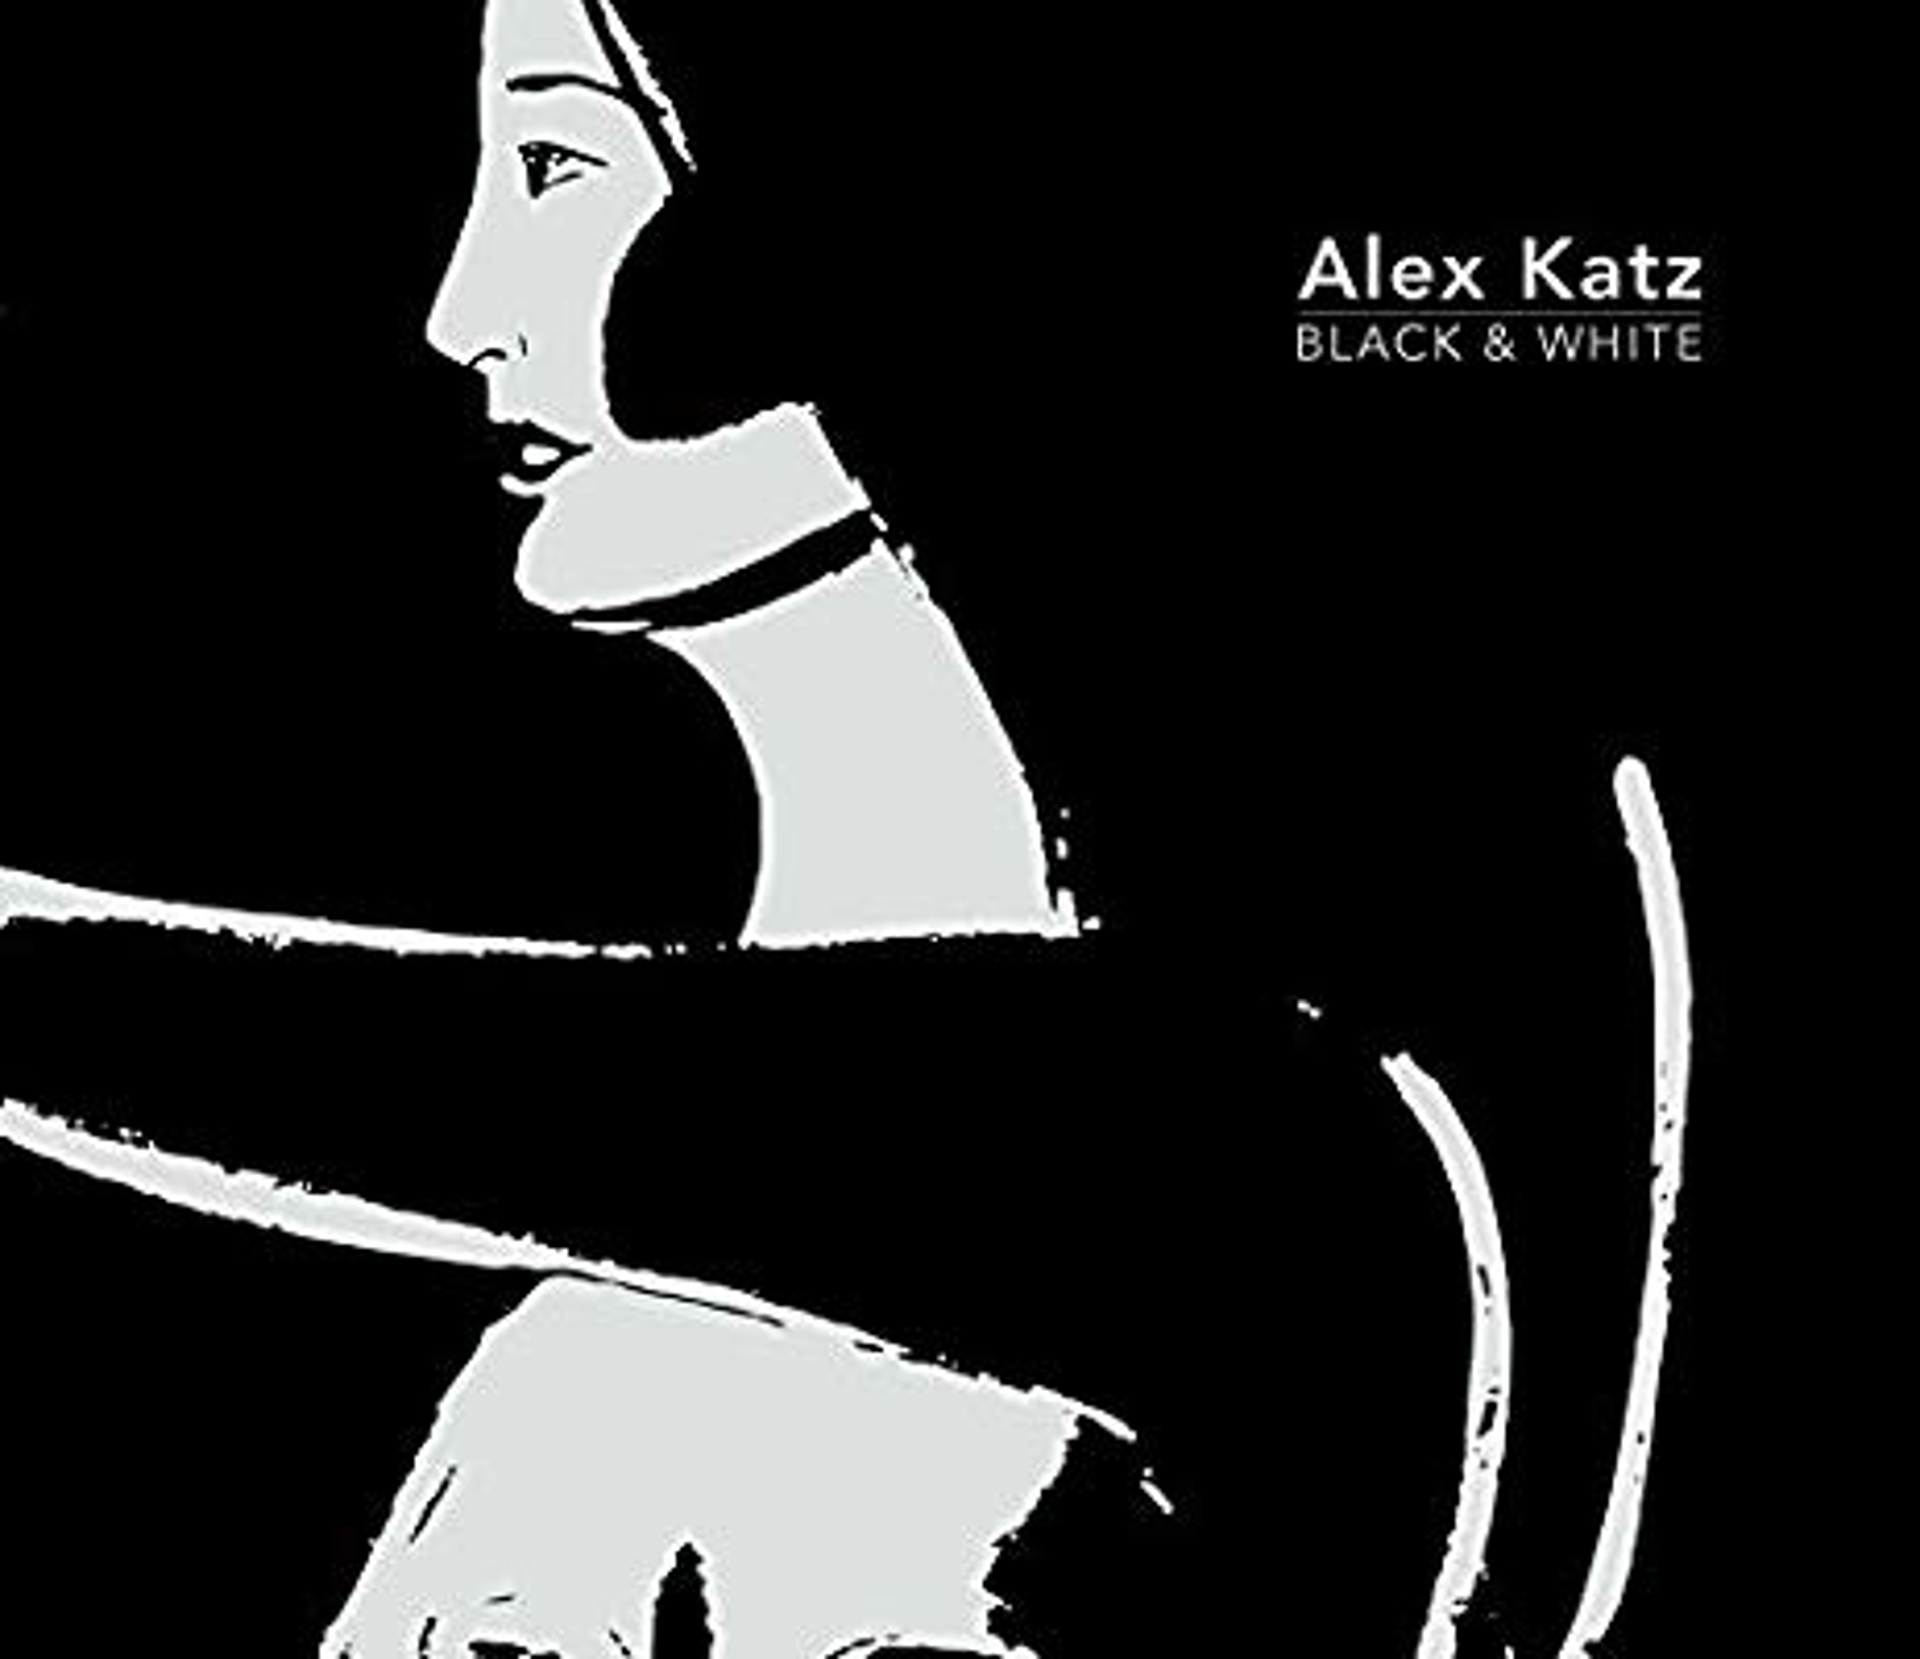 Alex Katz: Black & White by Alex Katz